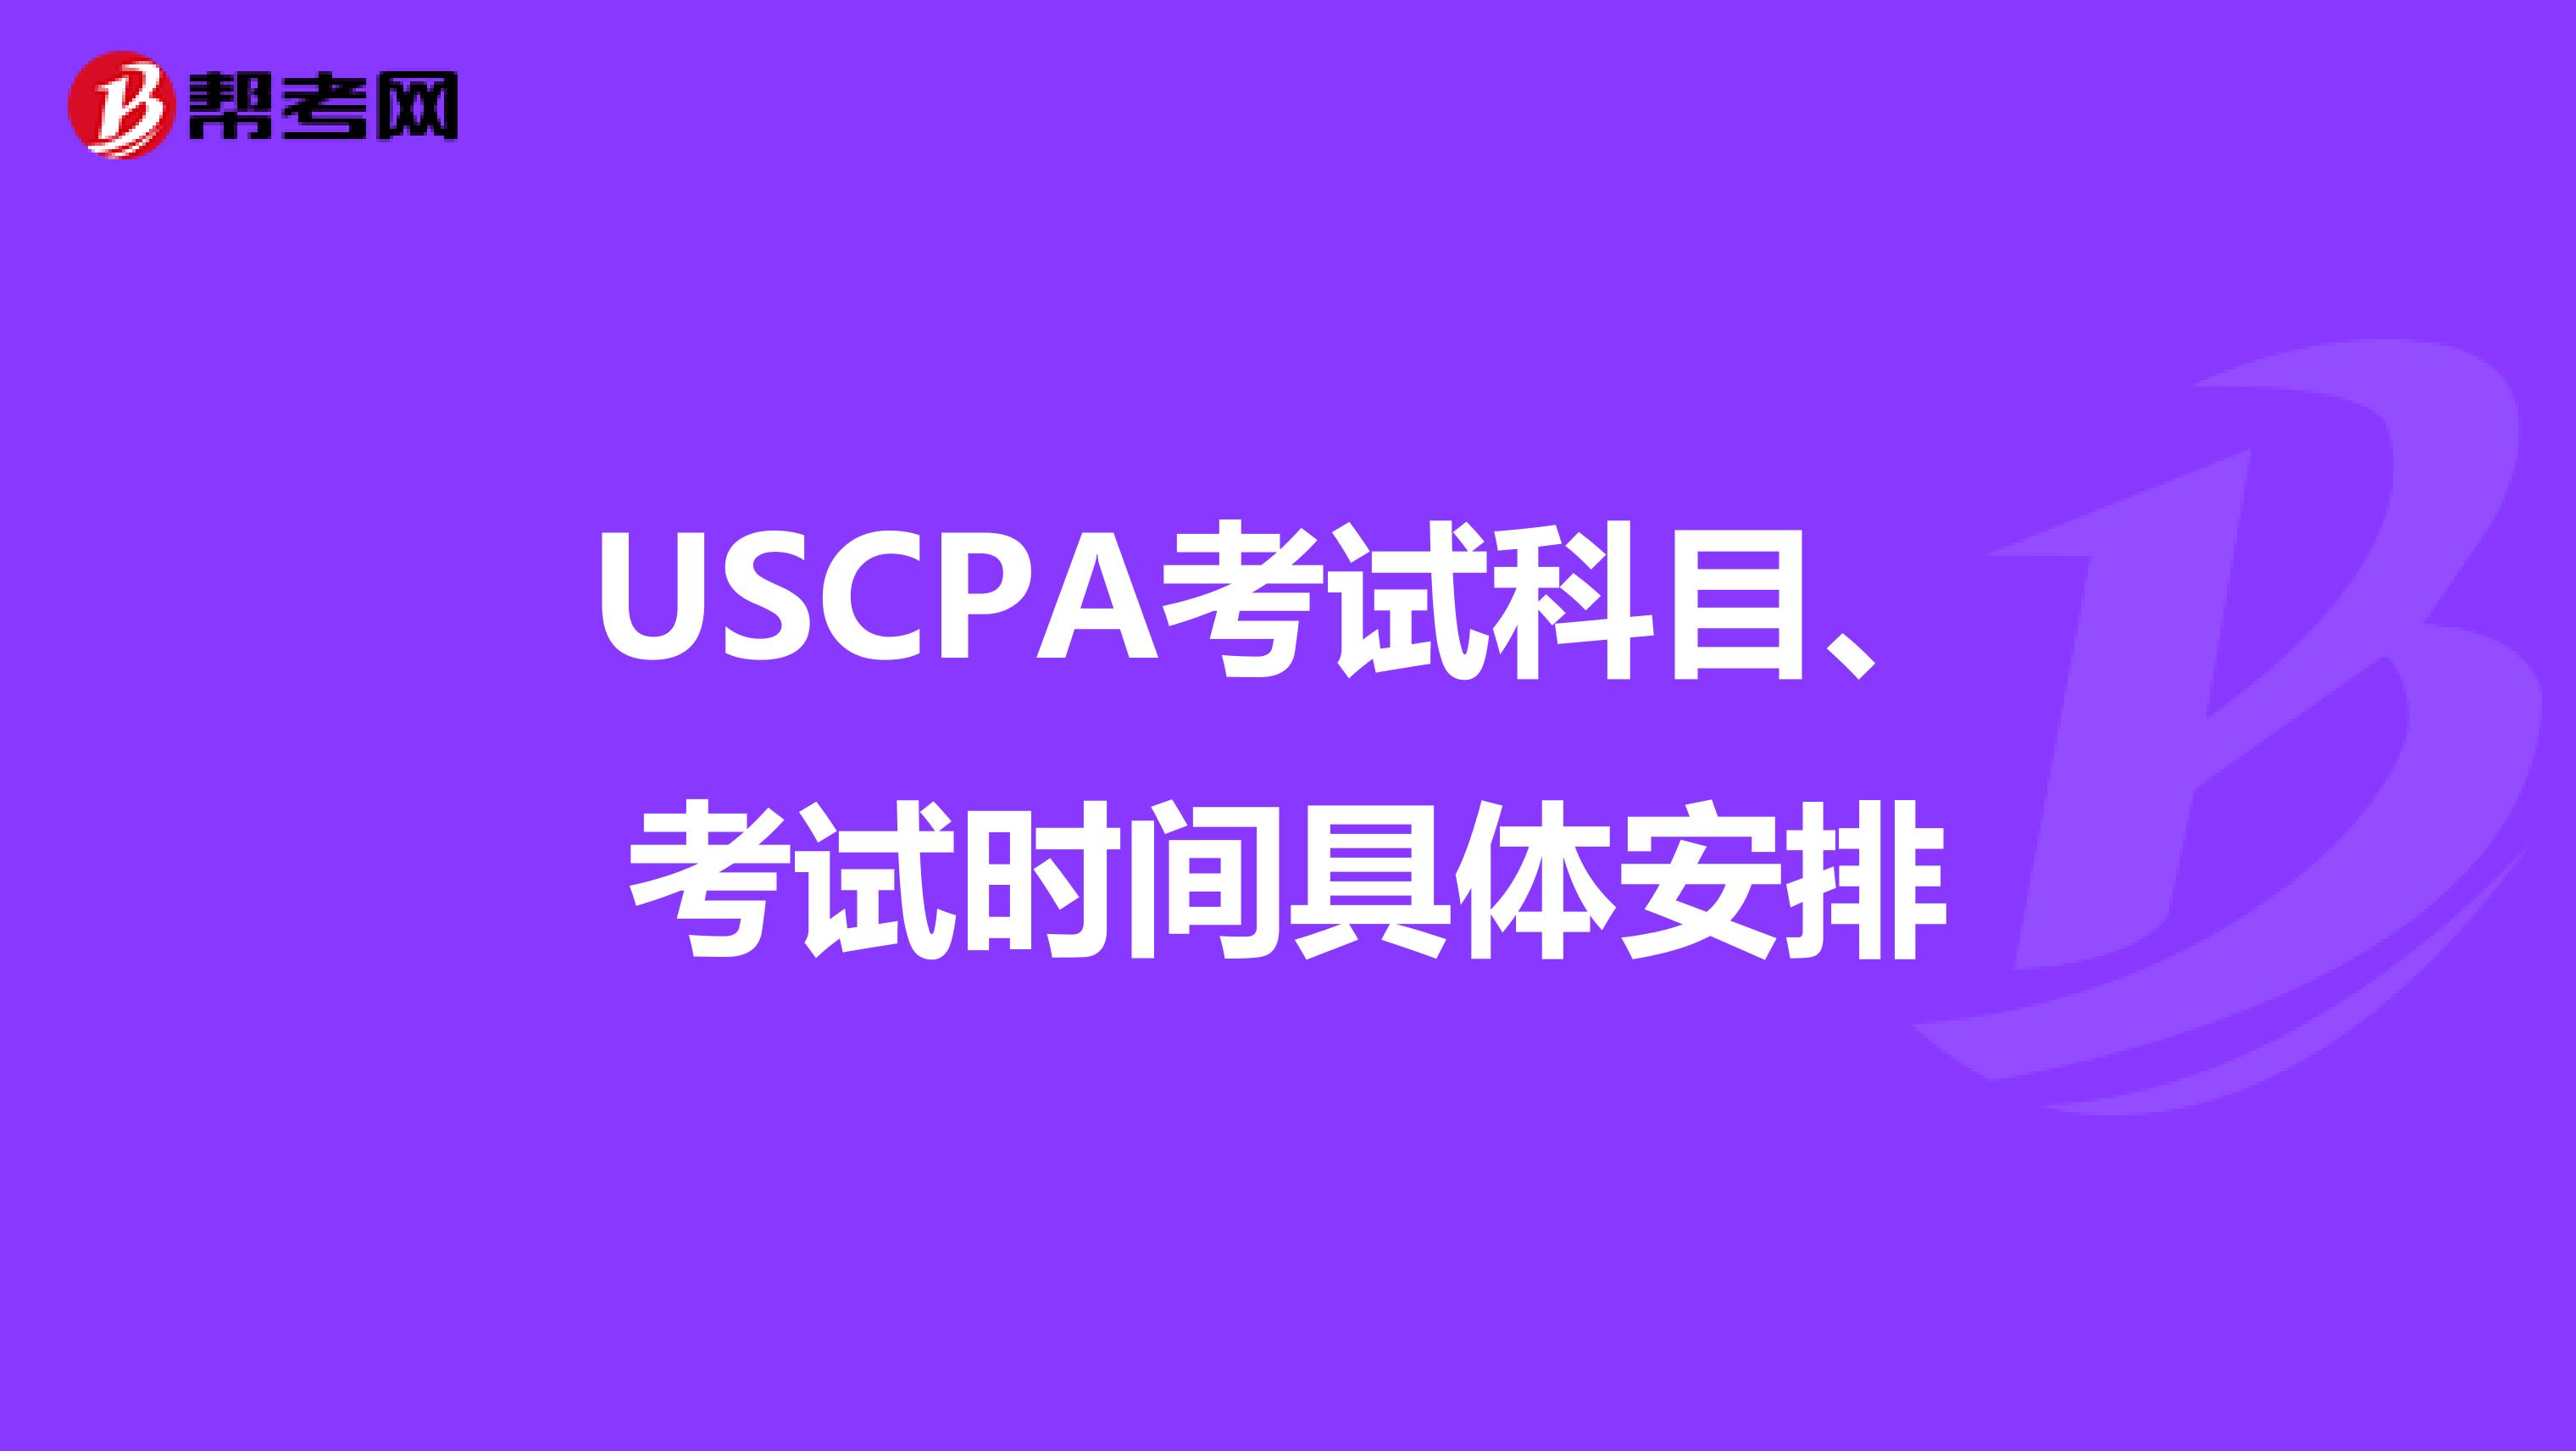 USCPA考试科目、考试时间具体安排